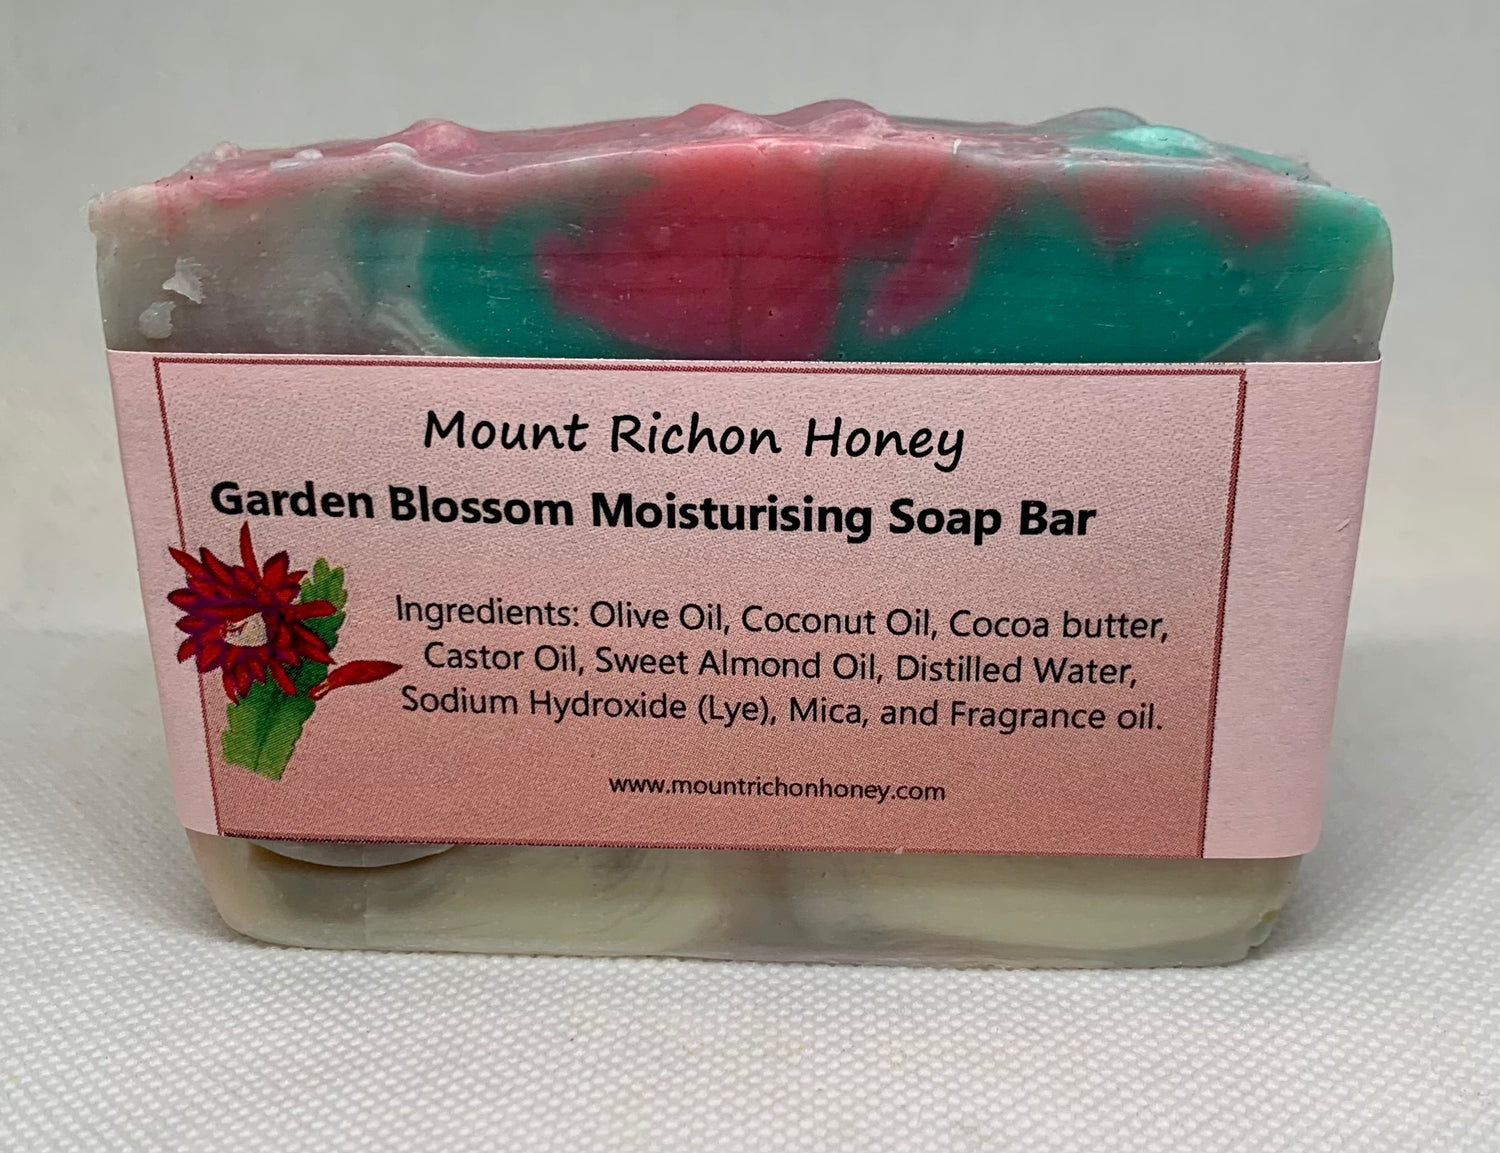 Garden Blossom Moisturising Soap Bar